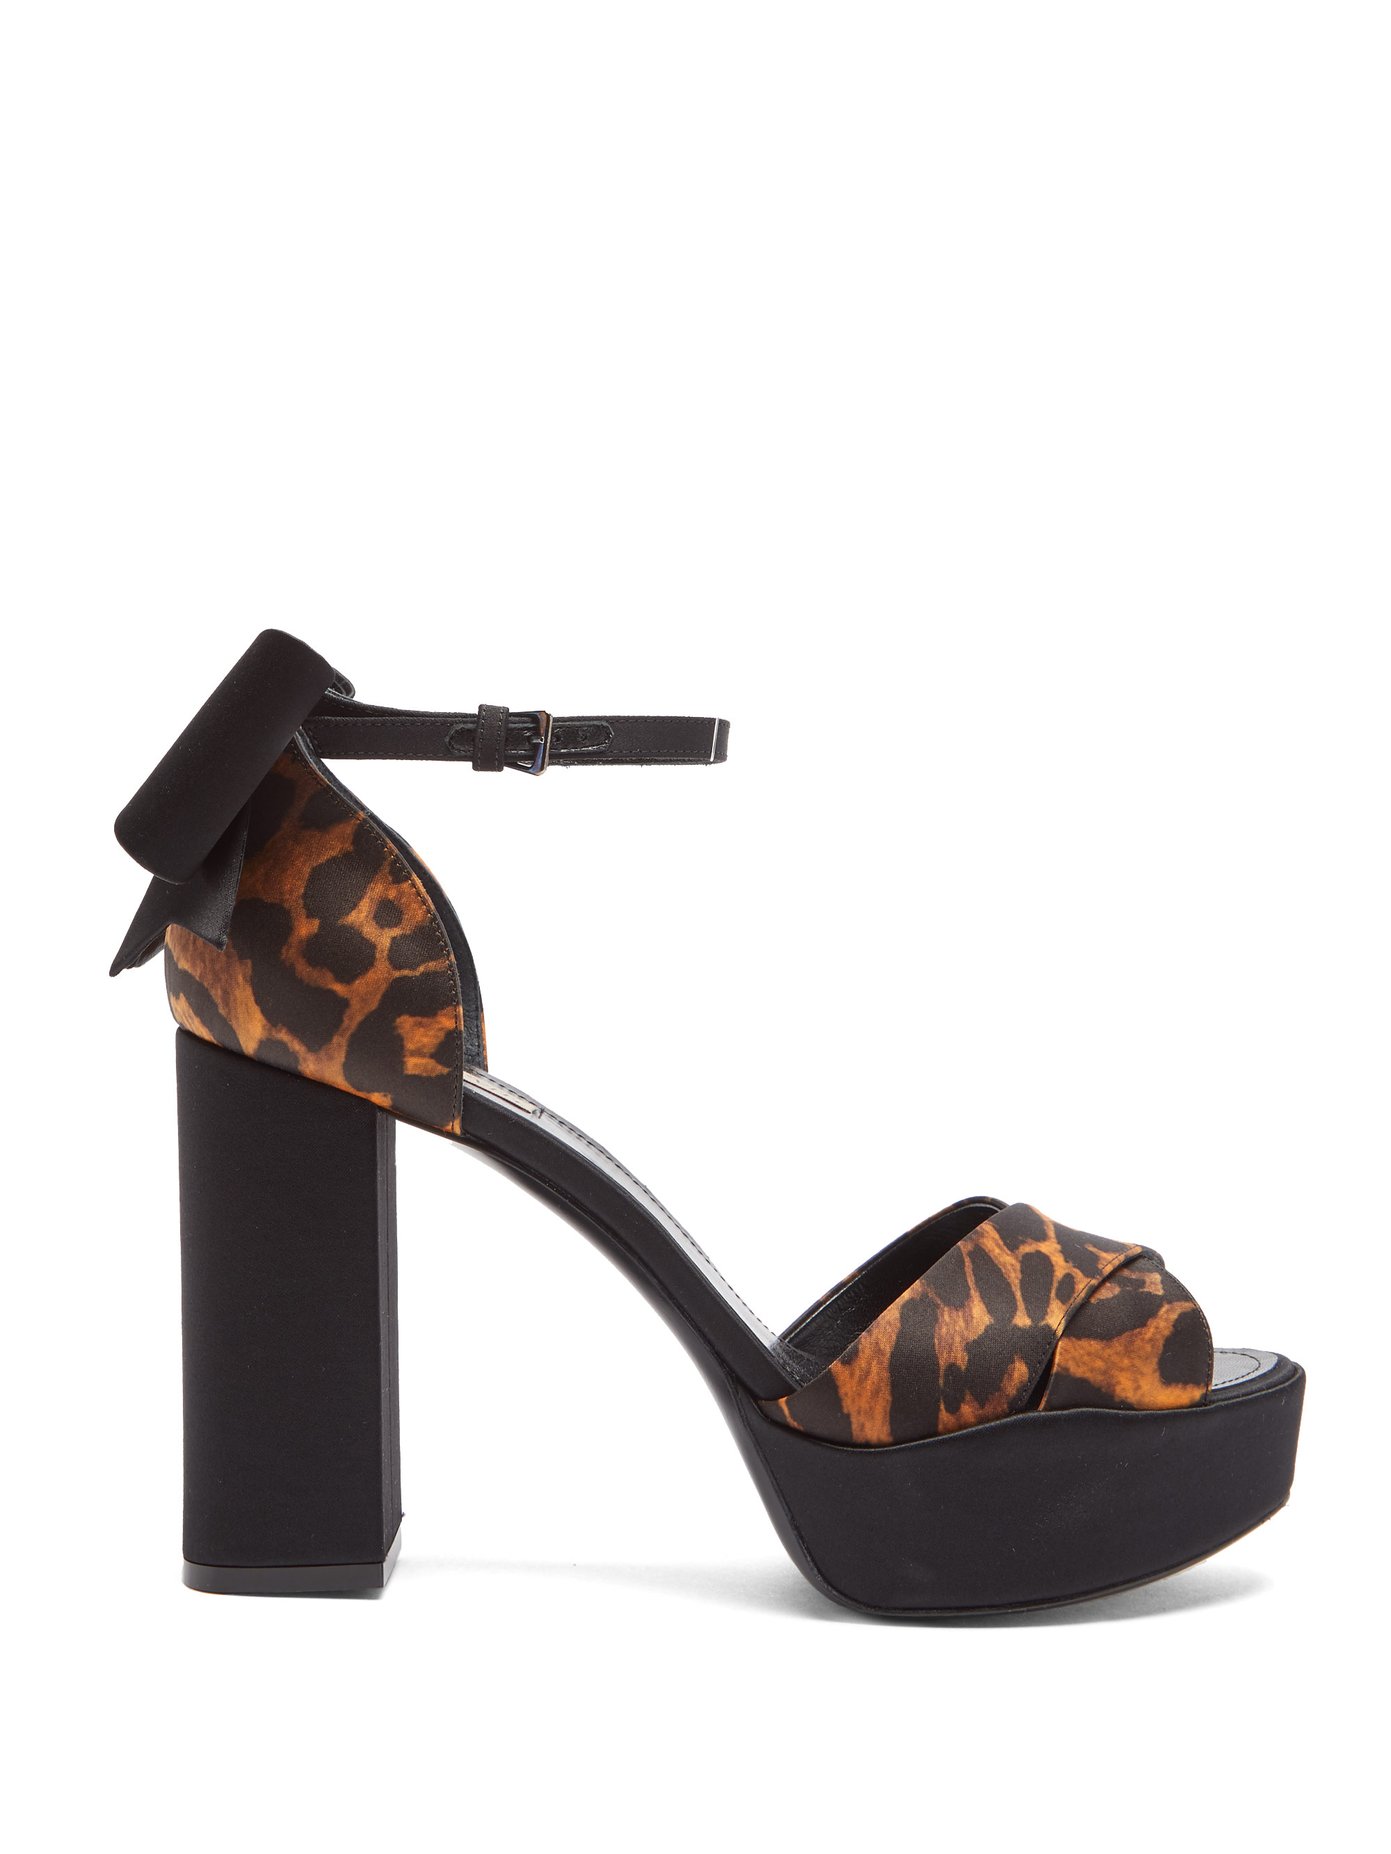 leopard print bow sandals